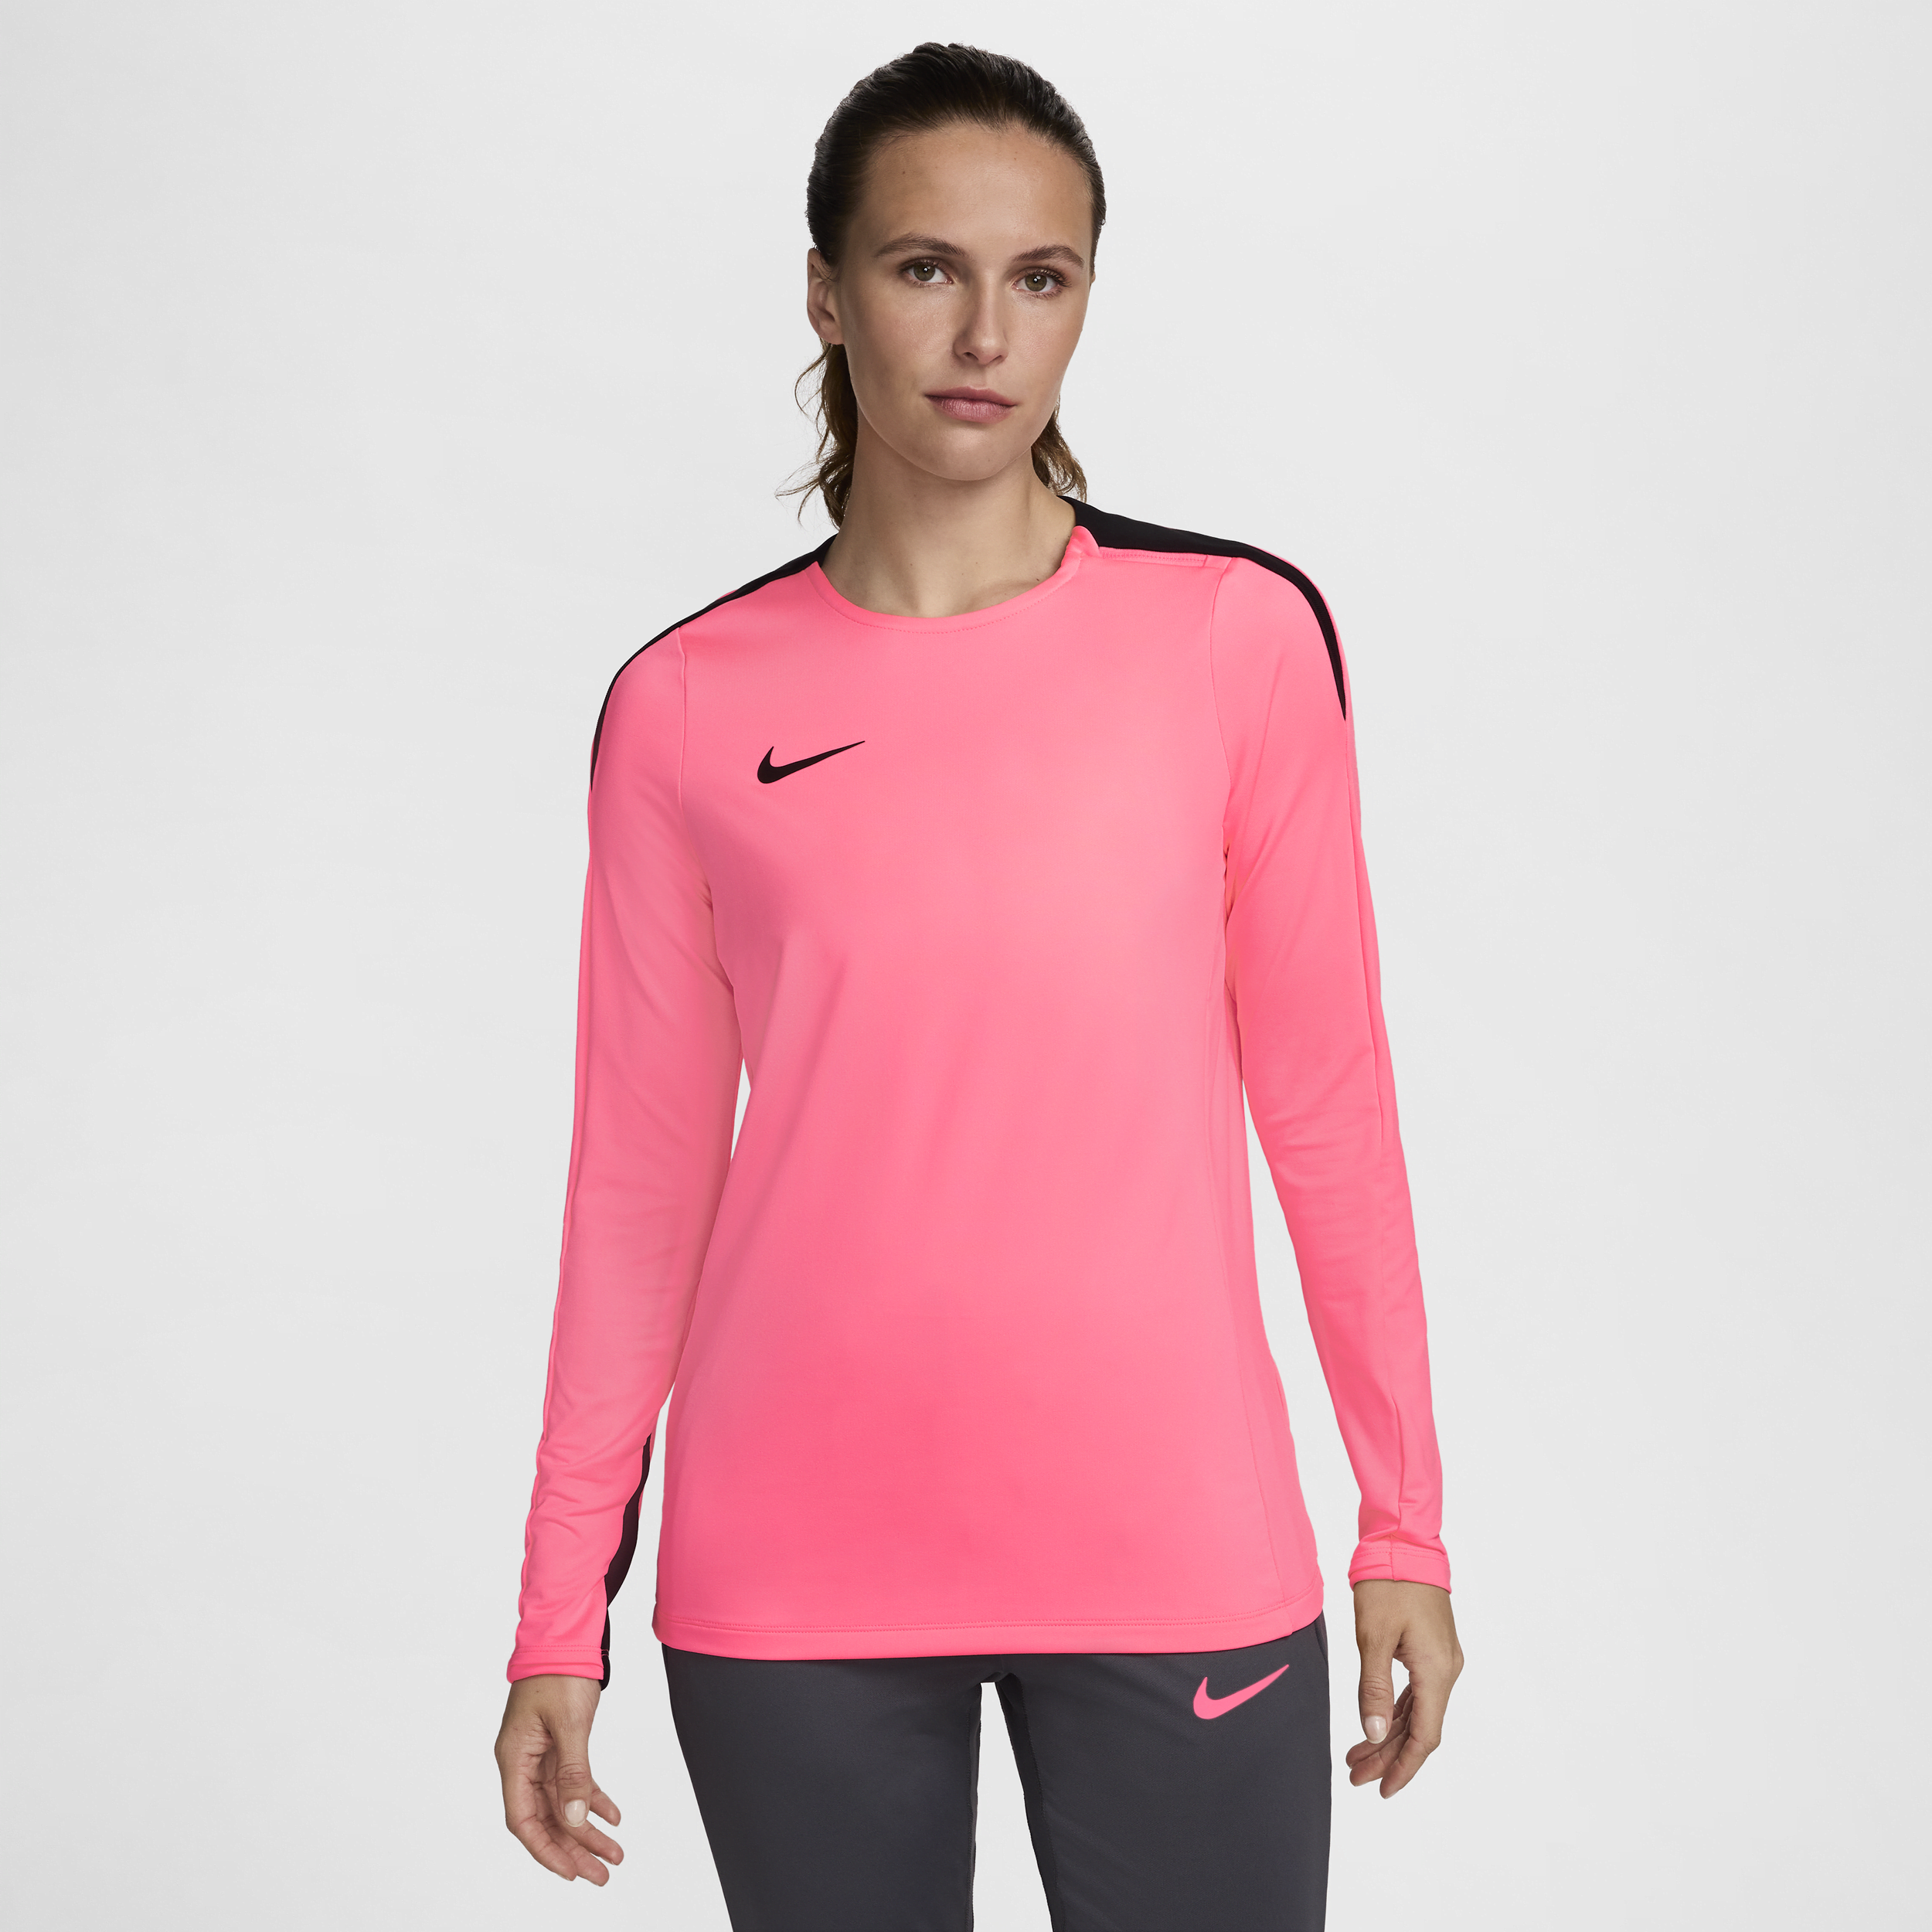 Nike Strike Dri-FIT voetbaltop met ronde hals voor dames Roze